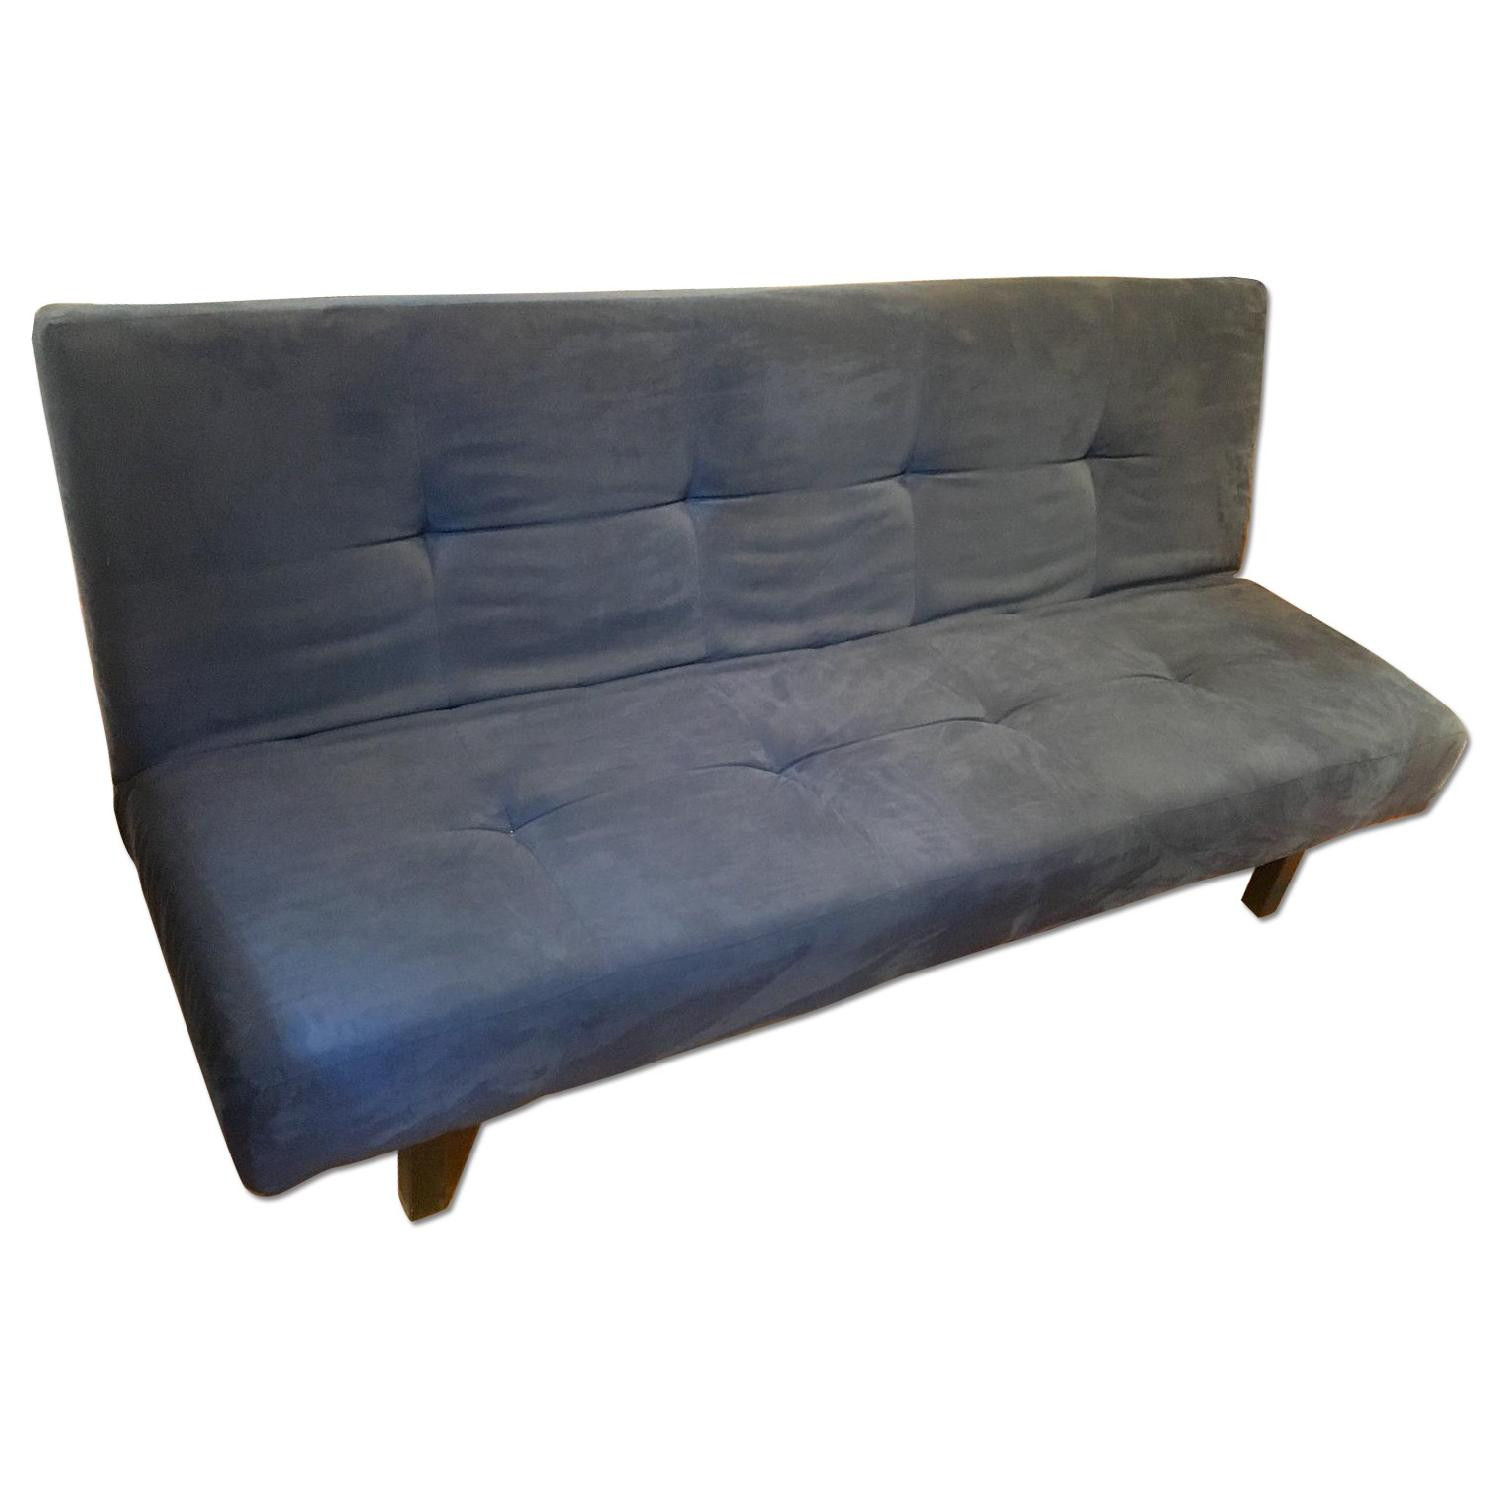 Best ideas about Balkarp Sleeper Sofa
. Save or Pin Ikea Balkarp Sofa Bed in Blue AptDeco Now.